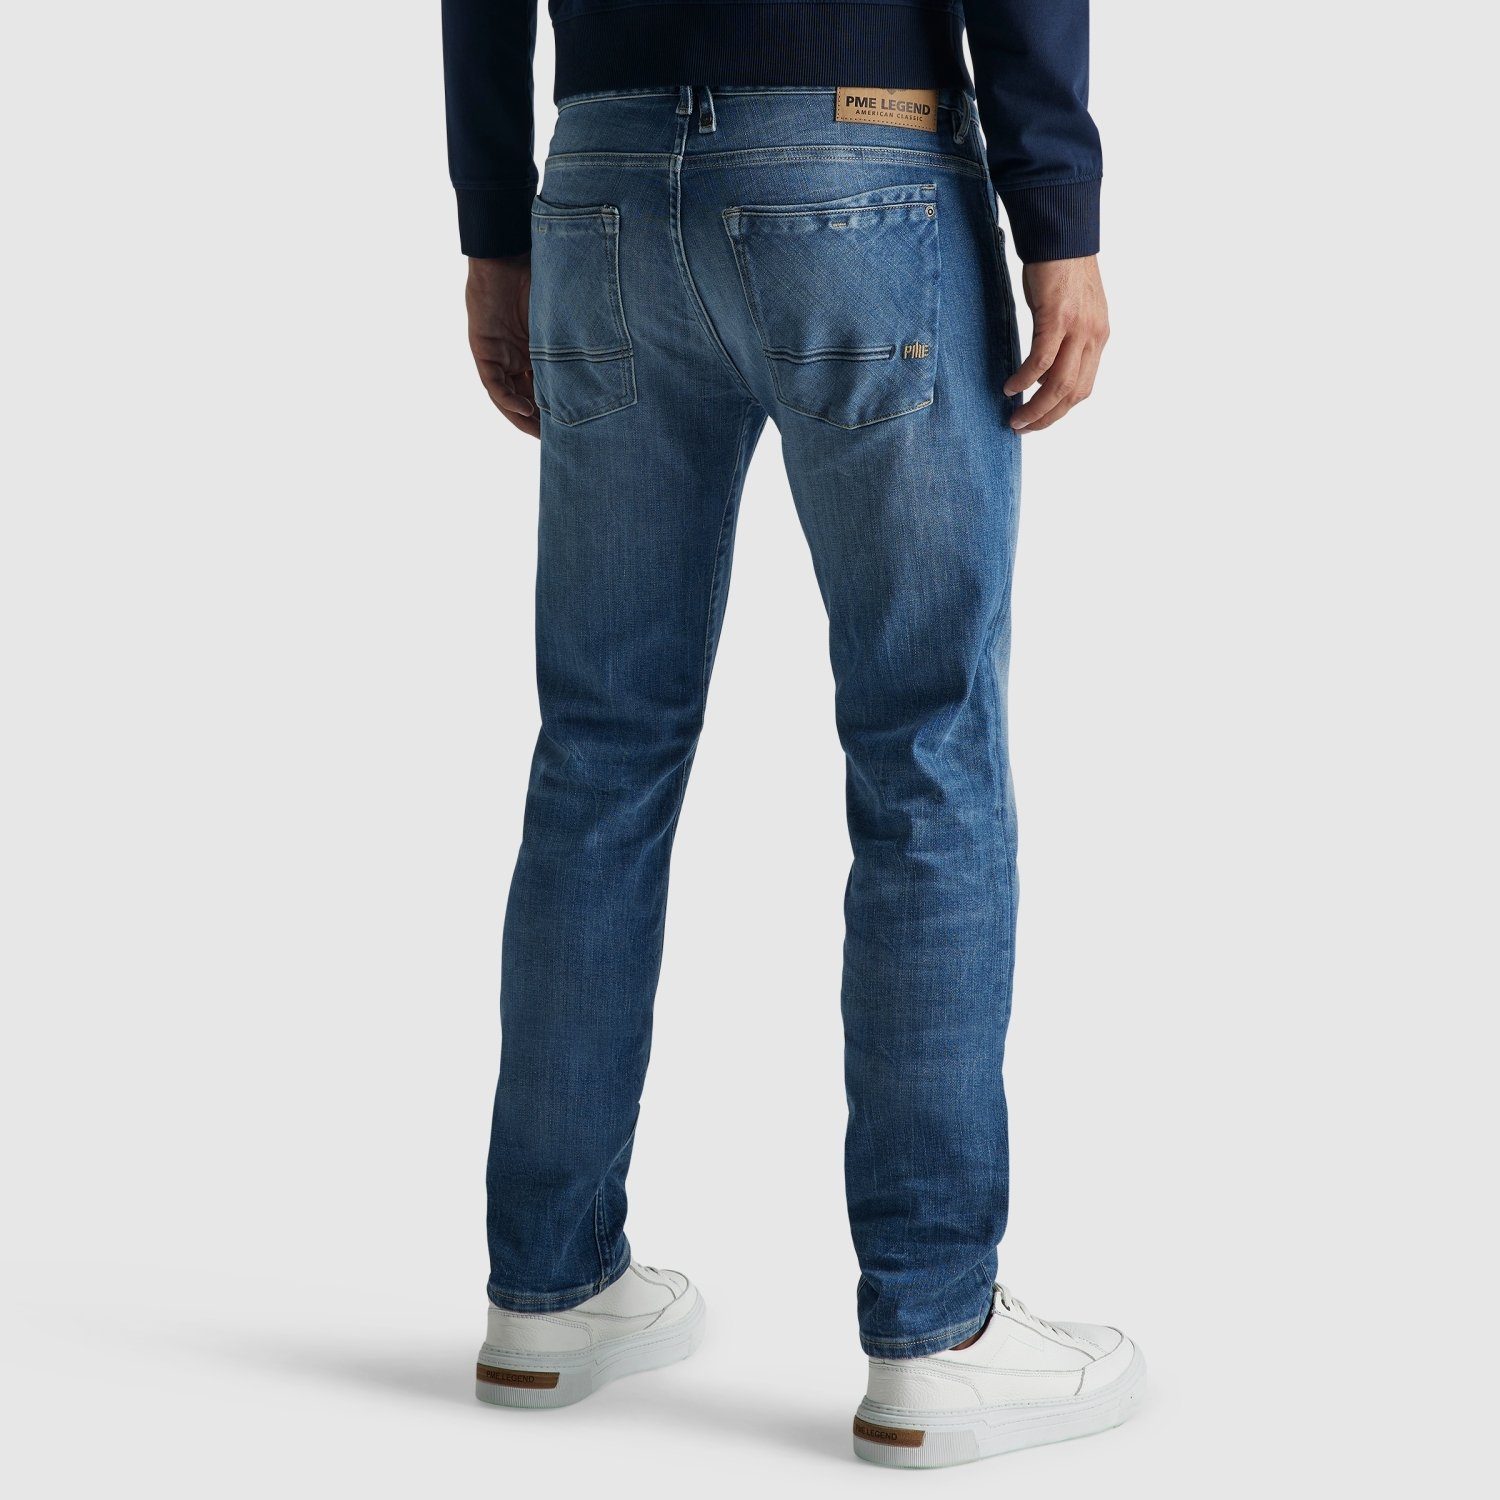 PME LEGEND 5-Pocket-Jeans COMMANDER MID FRESH BLUE blau 3.0